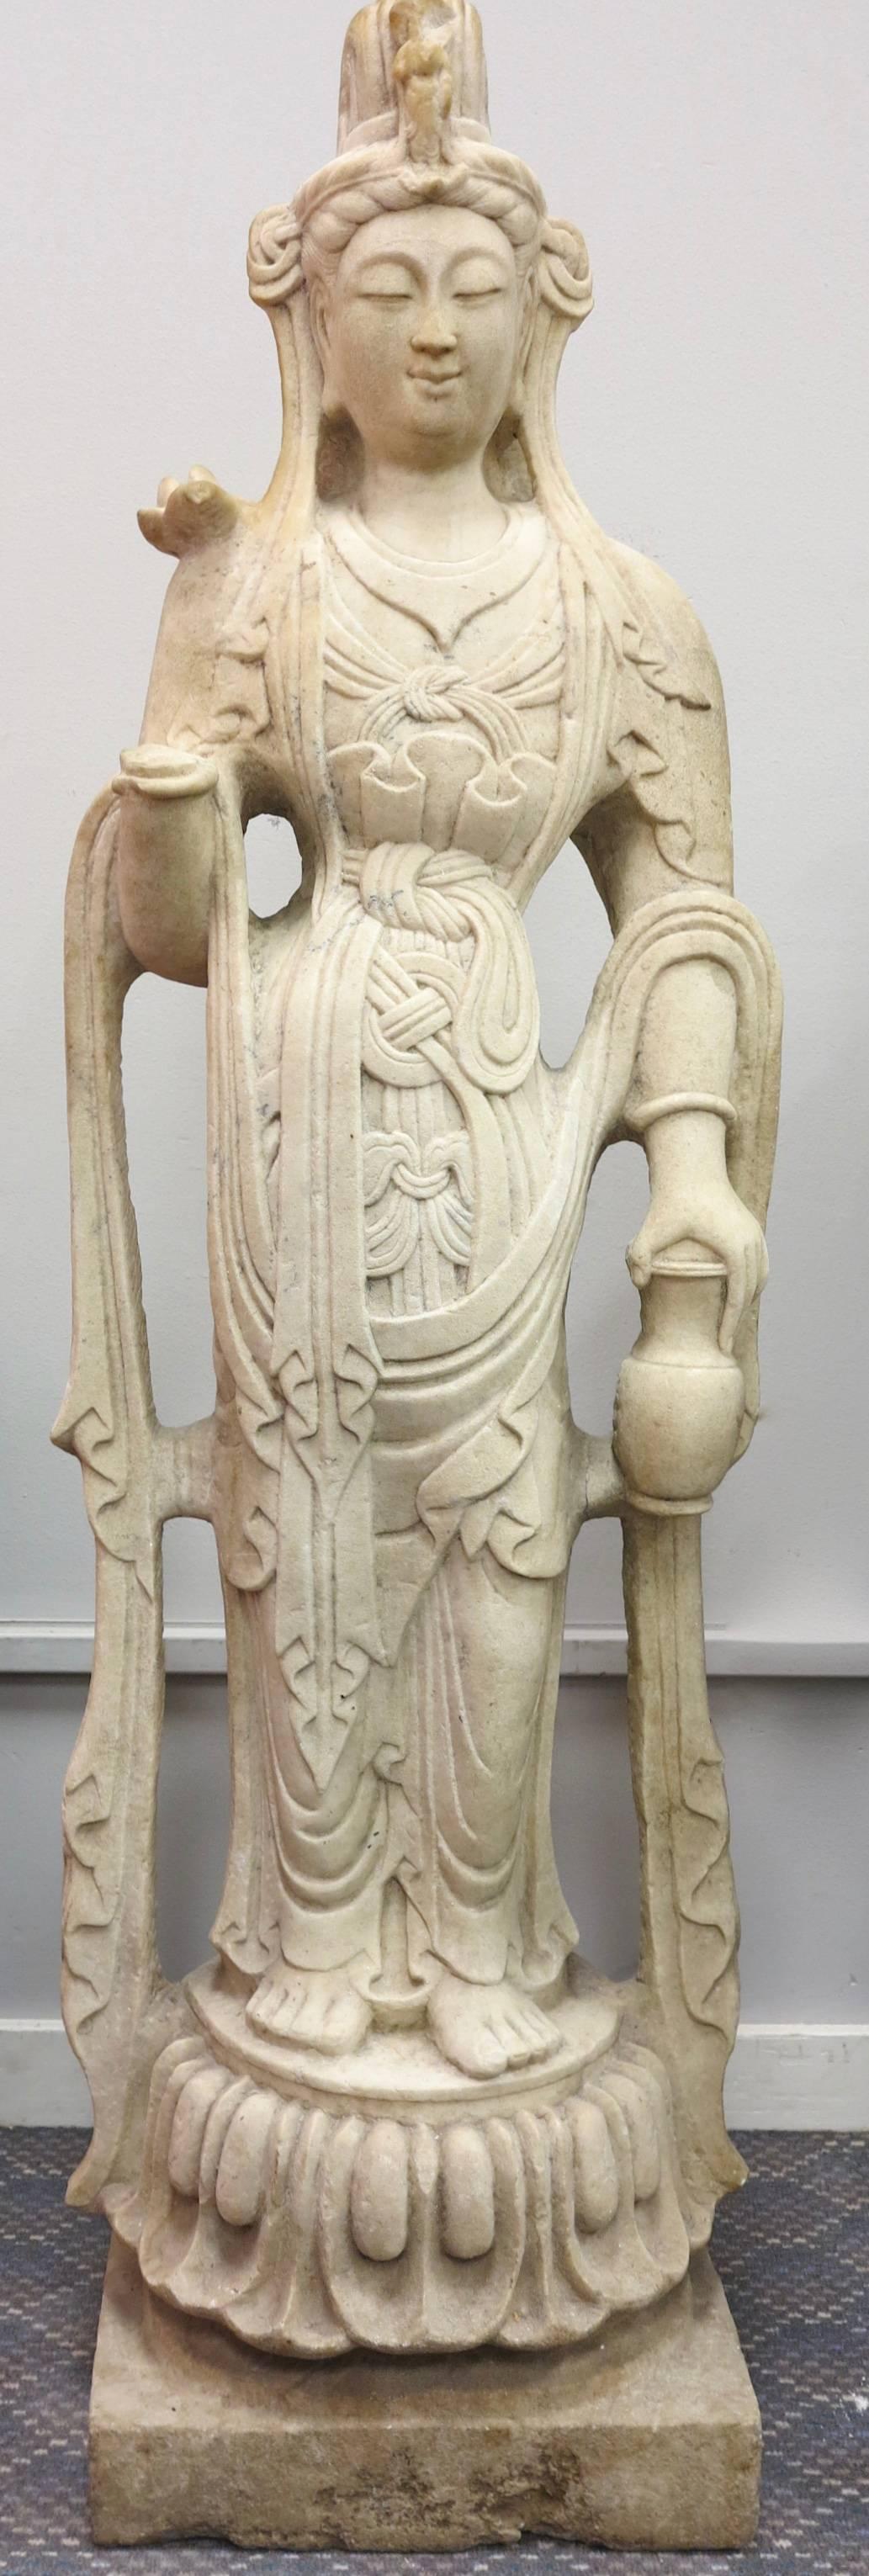 Unknown Figurative Sculpture - Antique standing Guan Yin Bodhisattva marble sculpture